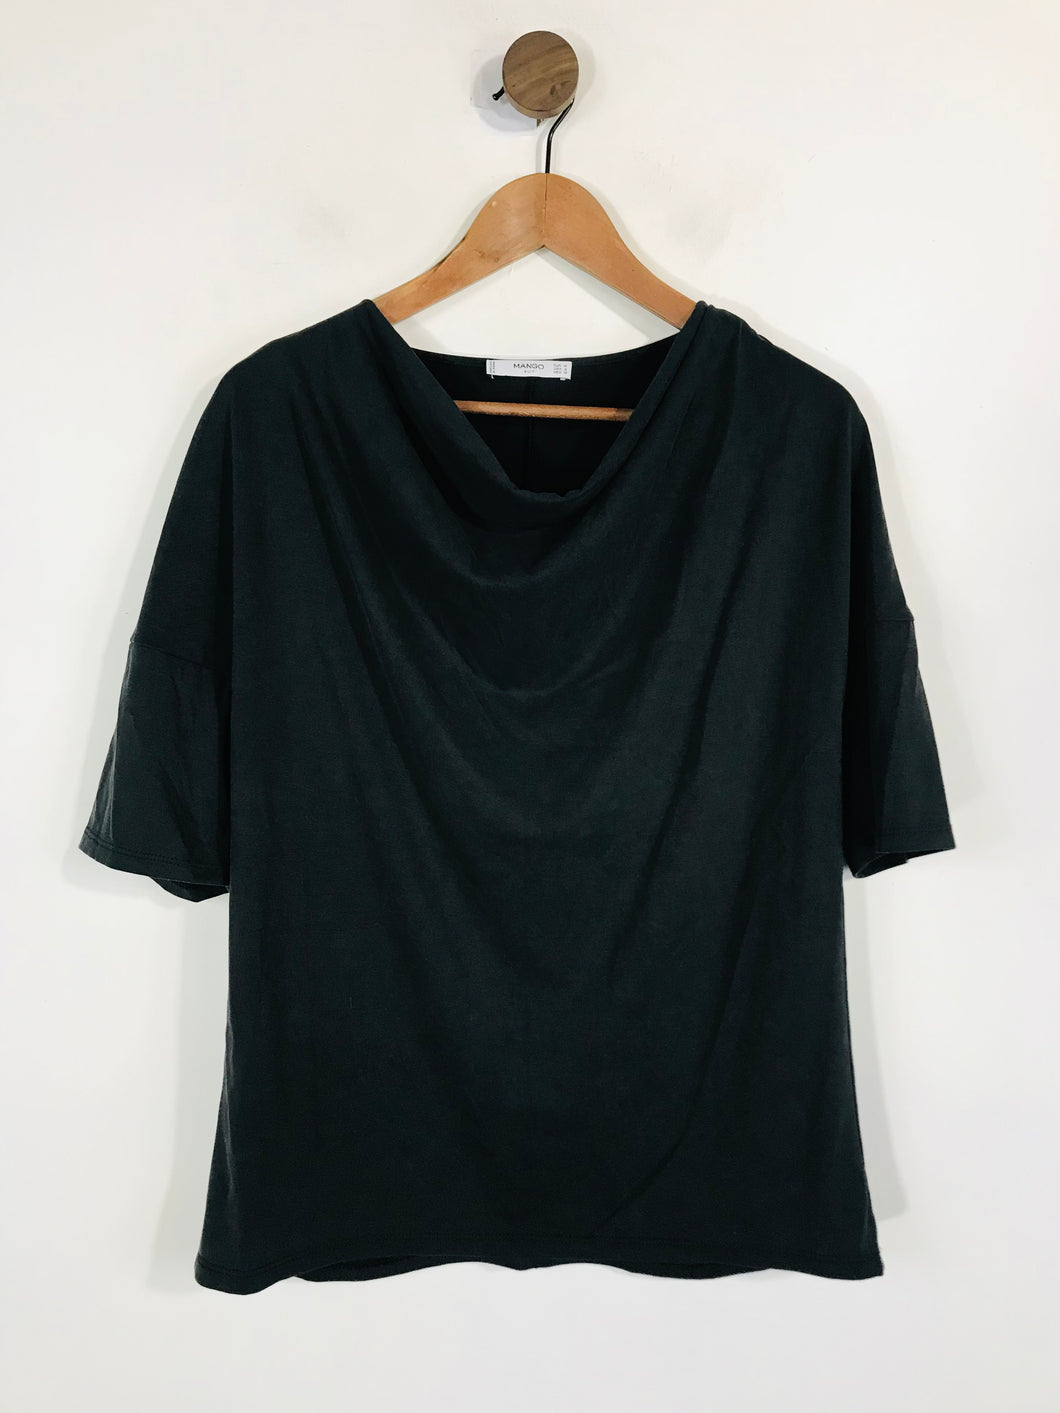 Mango Women's Cowl Neck T-Shirt | M UK10-12 | Black